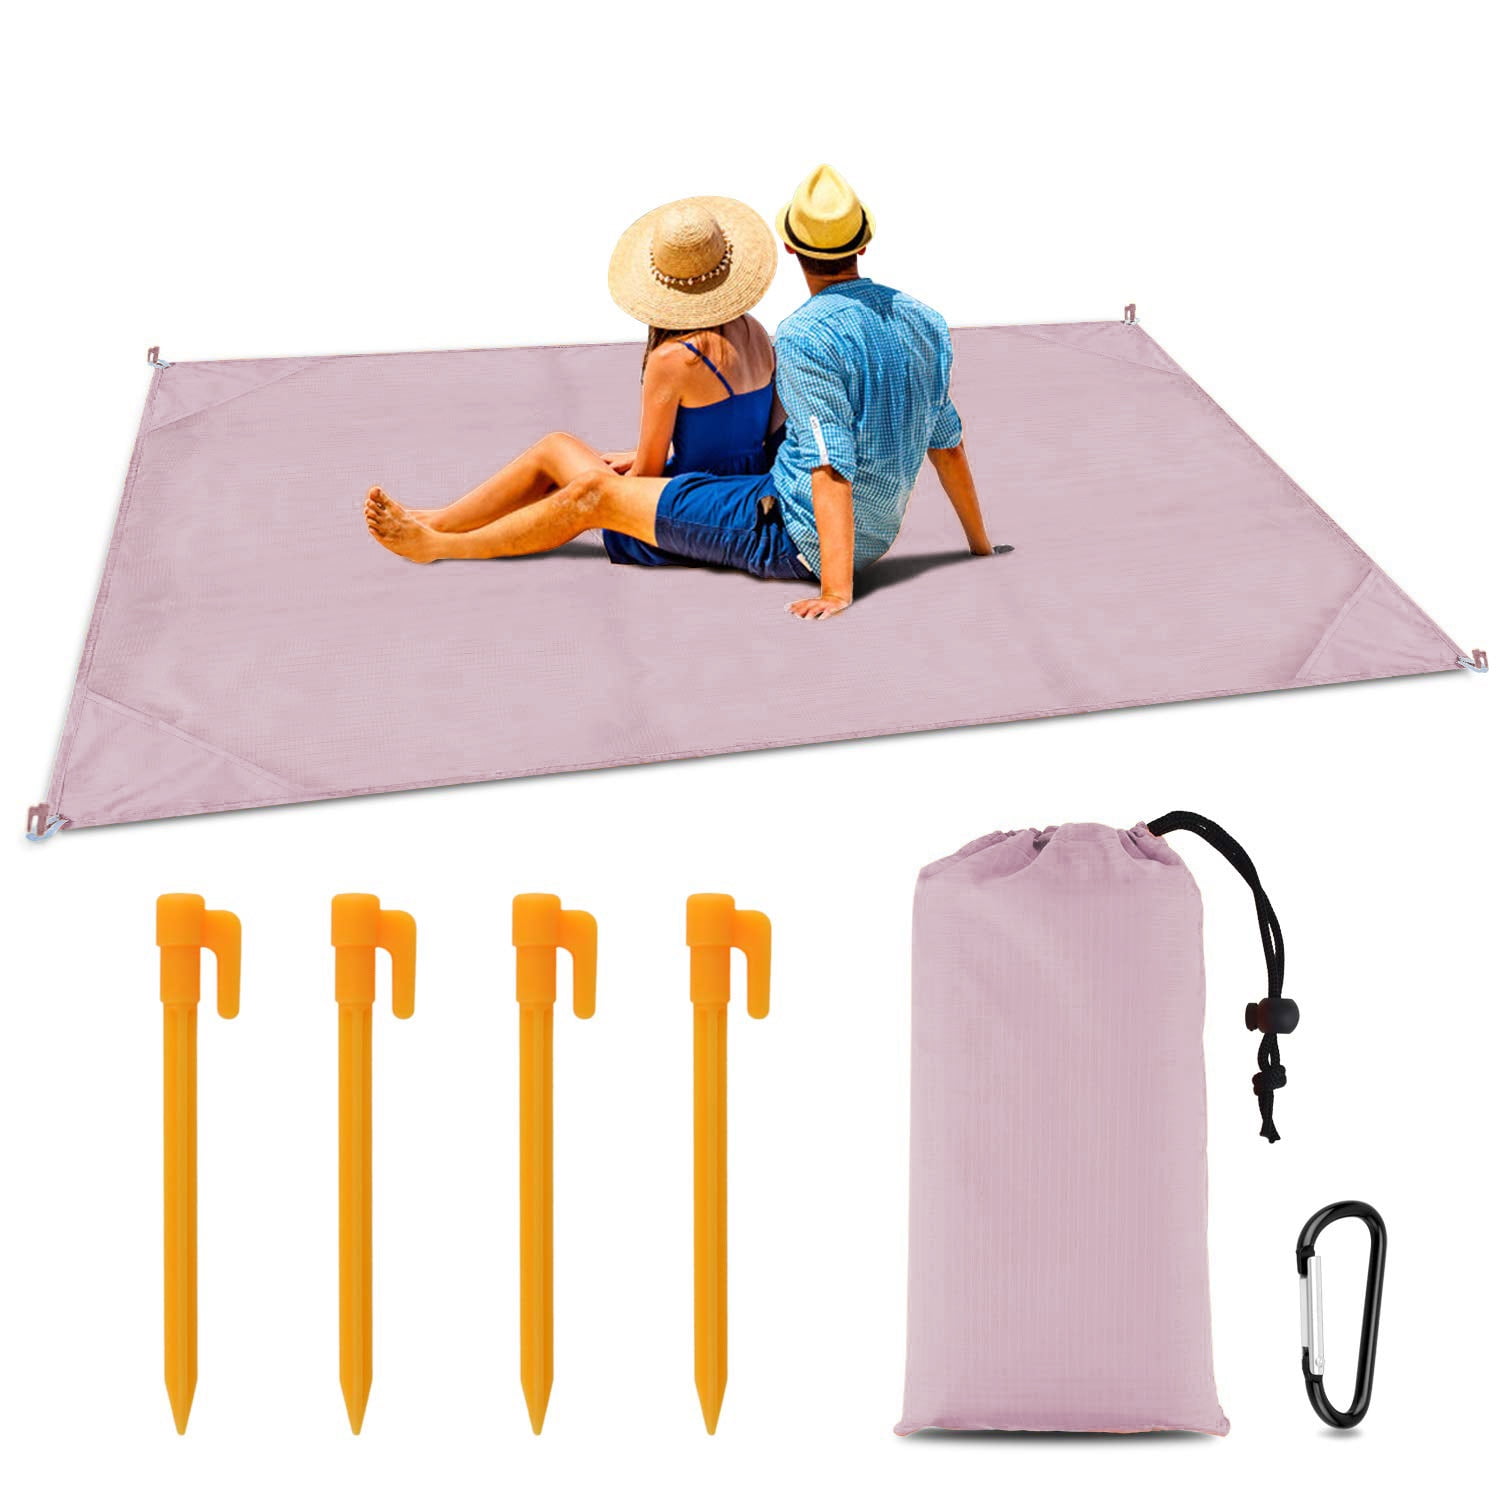 Waterproof Outdoor Garden Beach Camping Picnic Mat Pad Blanket Hiking Sport New 